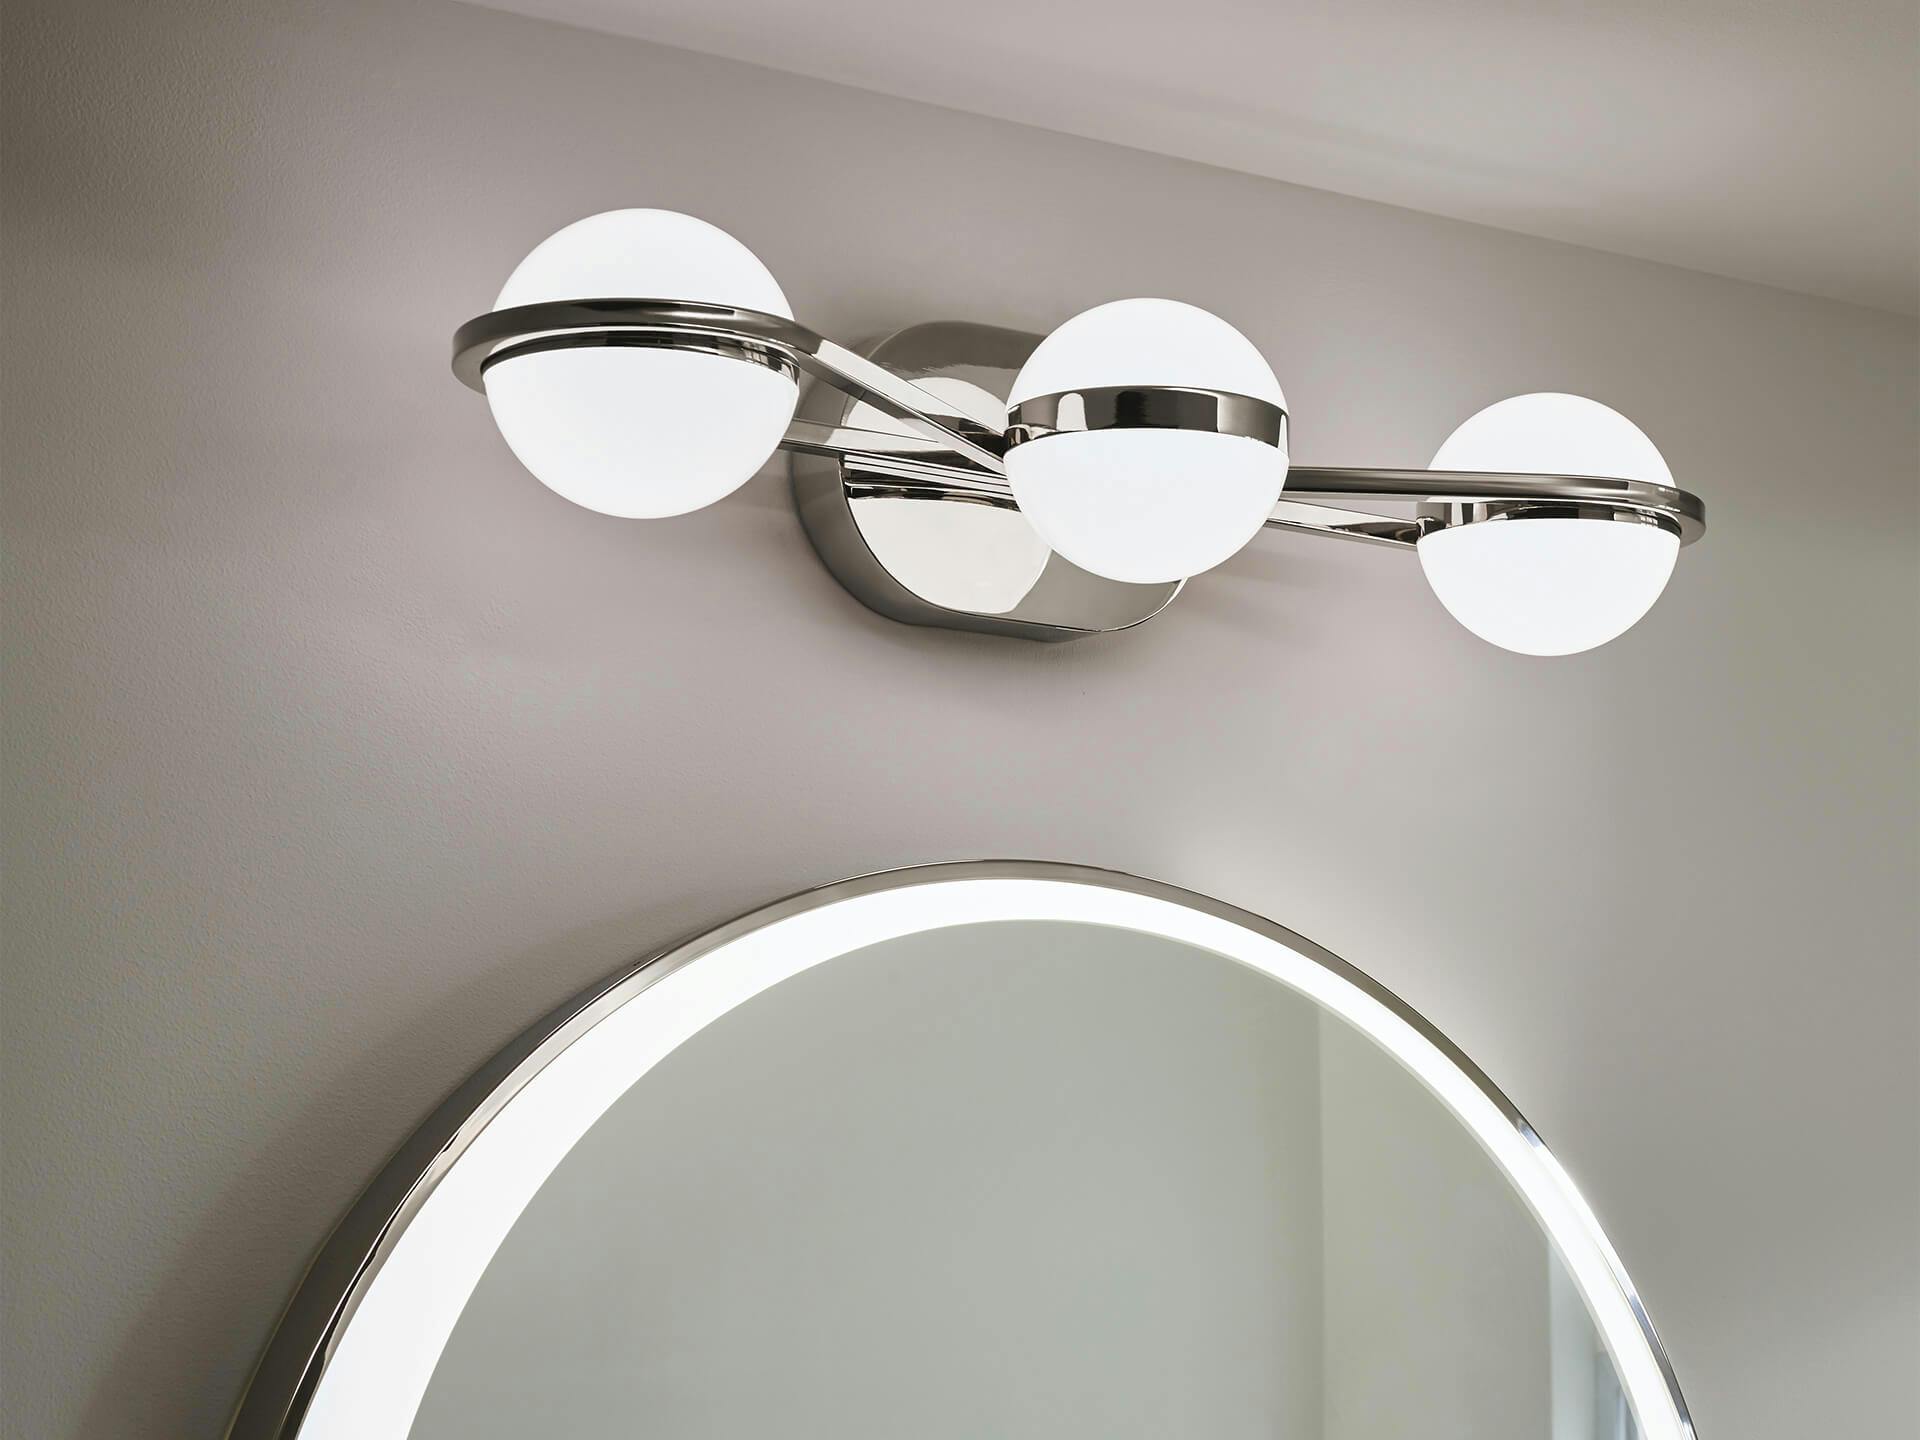 Polished Nickel 3 light Brettin Vanity light mounted above bathroom mirror